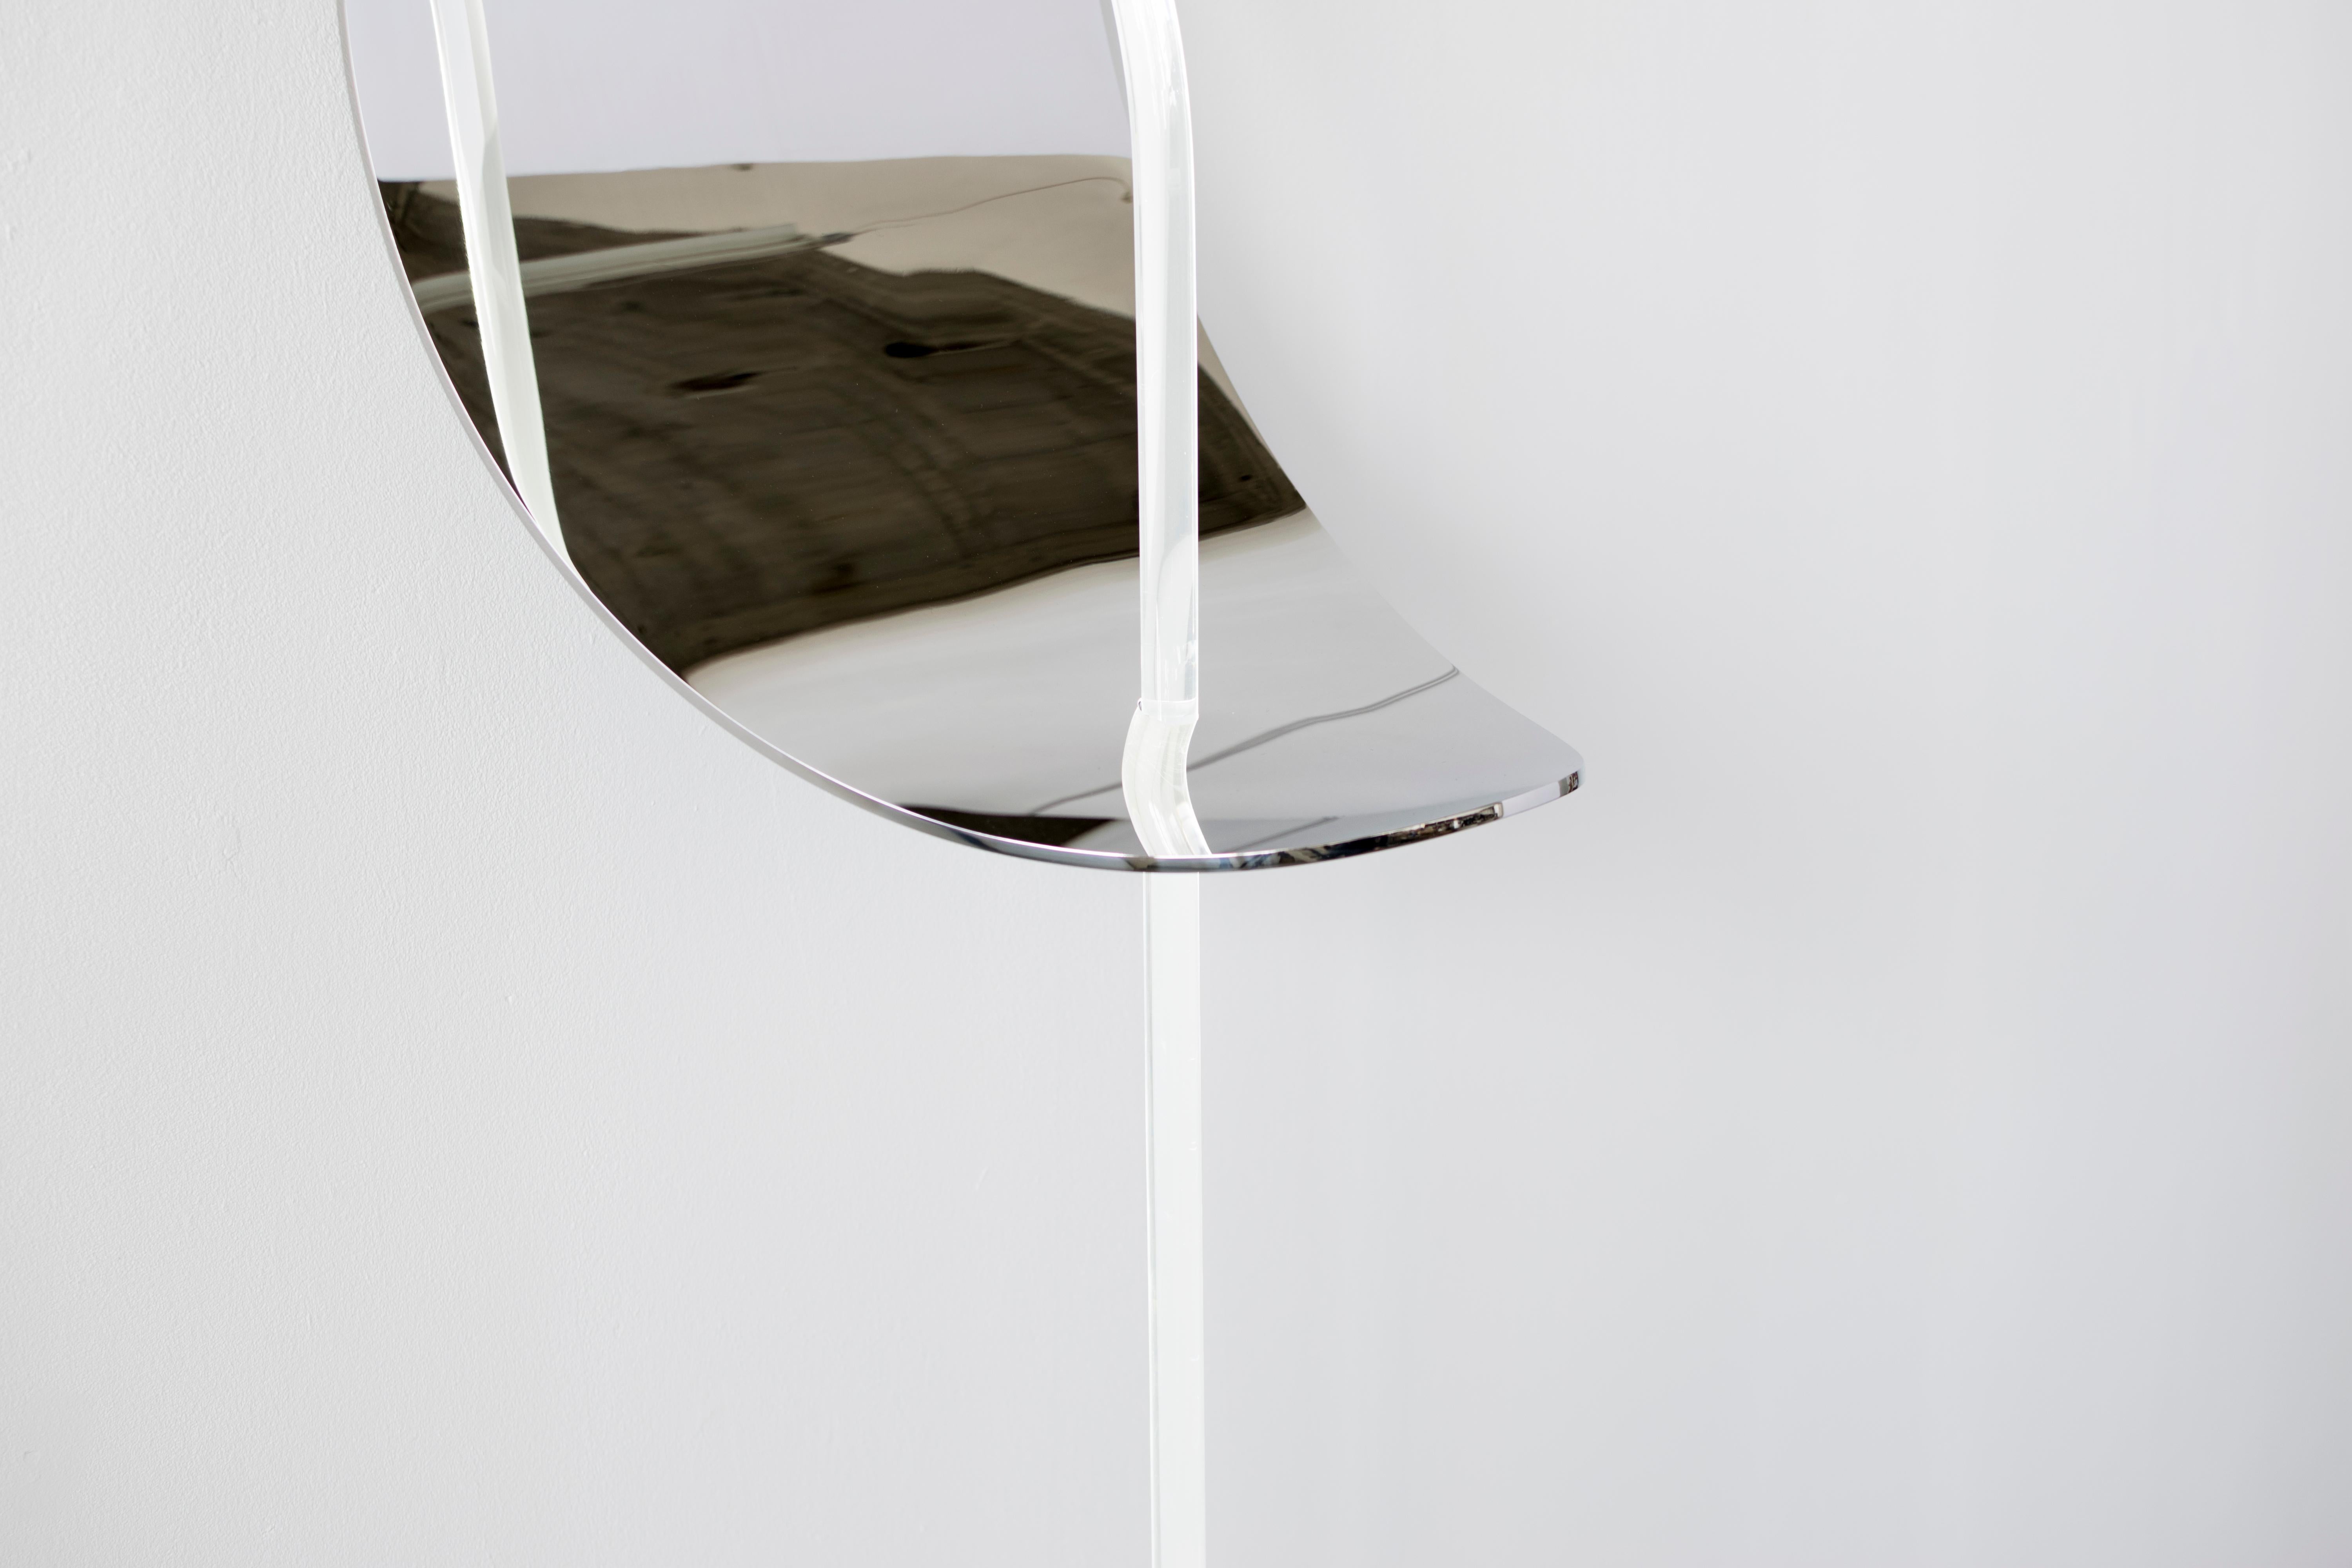 Dutch The elusive nature of perception No. 07 Mirror by Maximilian Michaelis